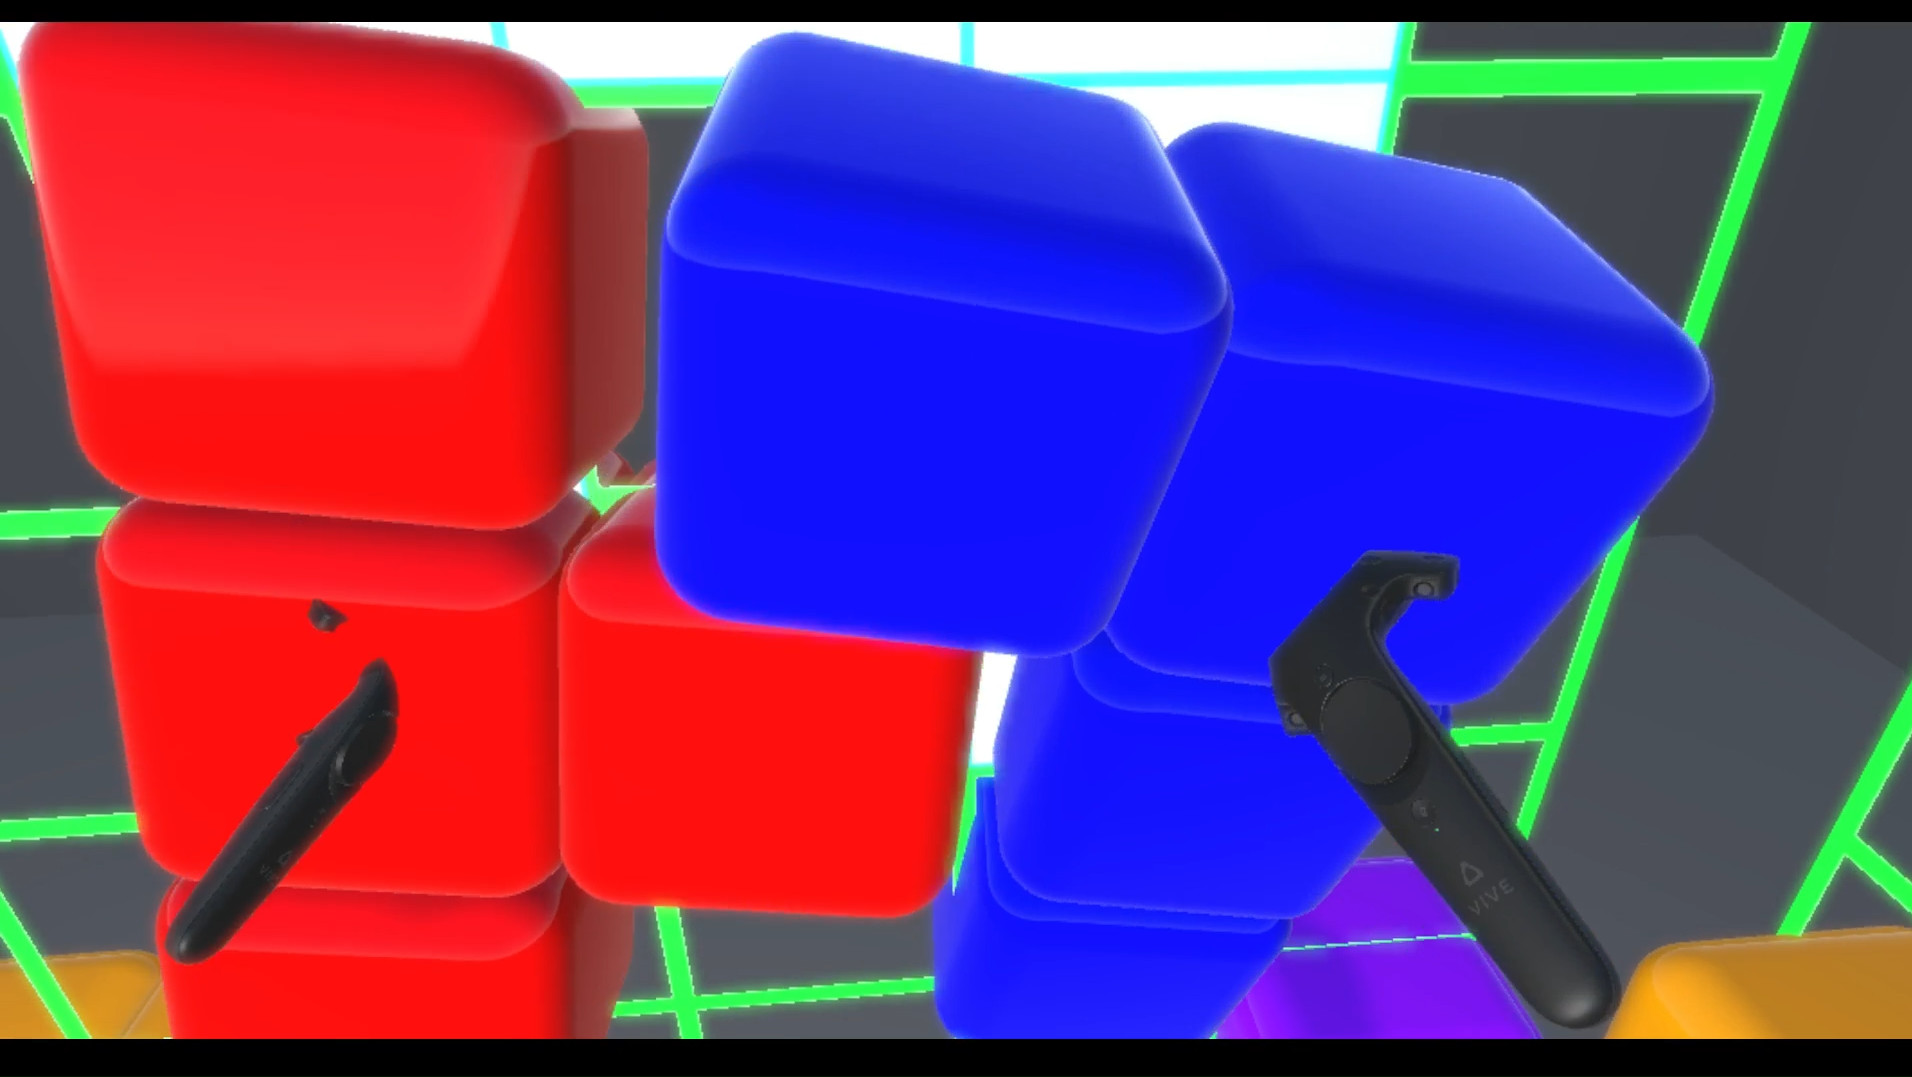 Brick Stack VR screenshot